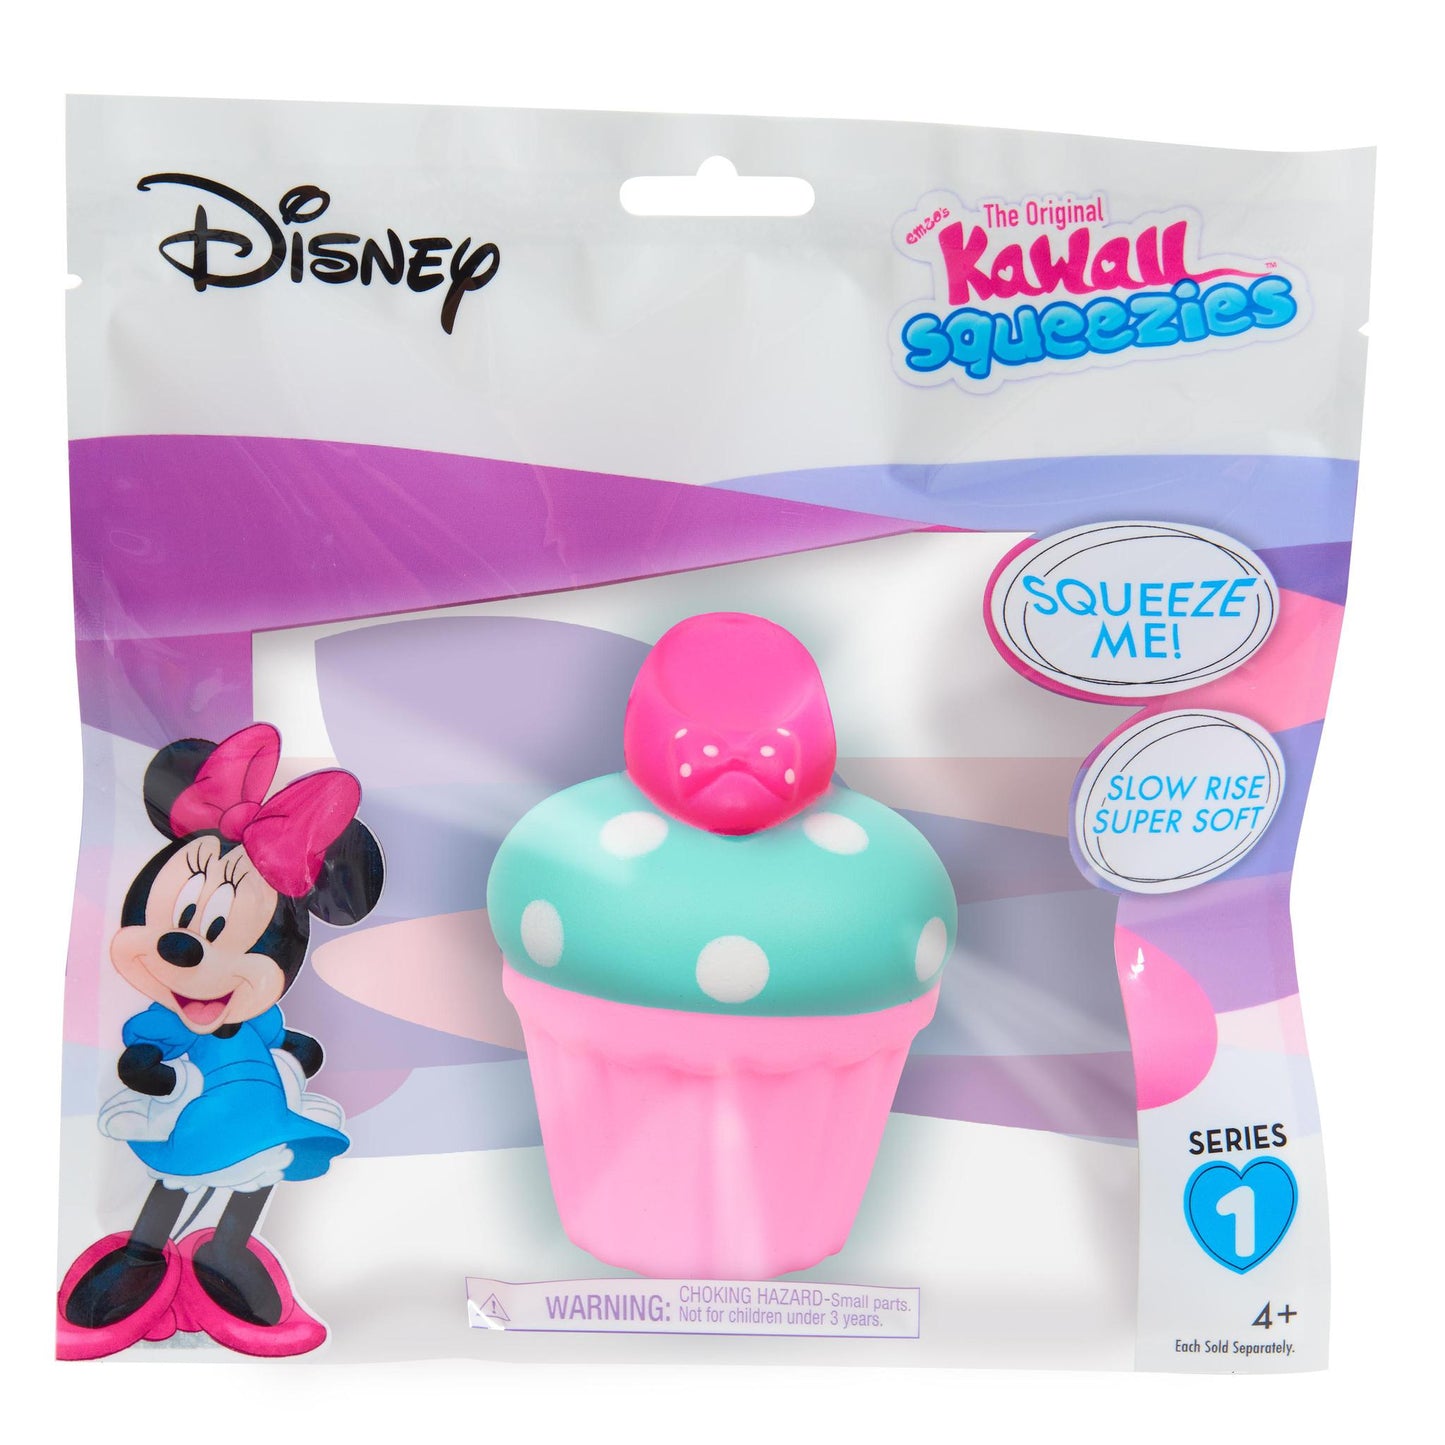 Disney Pretend Play Food - Minnie Mouse Kawaii Squeezies: Toast, Ice Cream Bar, Donut, Cream Puff, Cake, Rice Krispy, Teacup